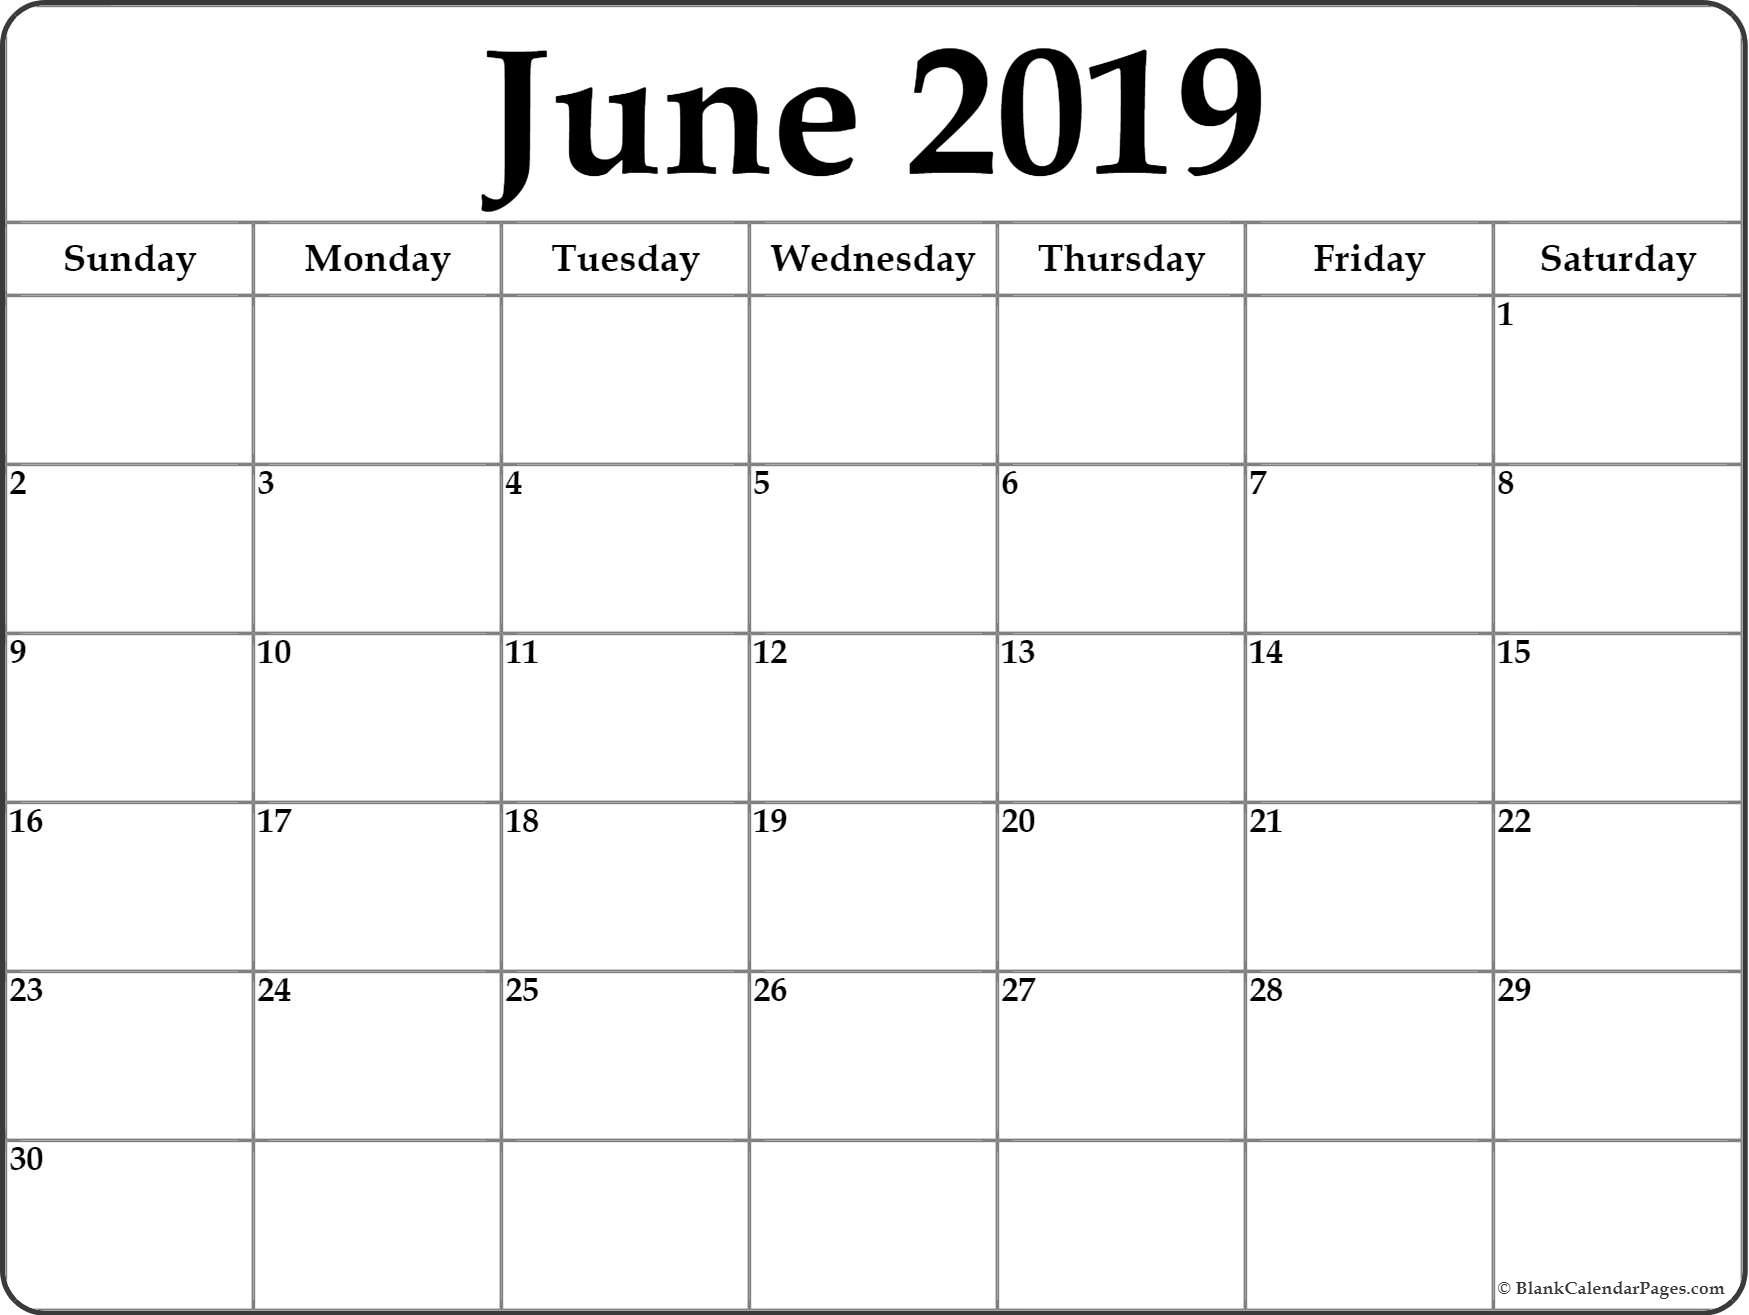 June 2019 Calendar | Free Printable Monthly Calendars Calendar Month By Month Printable